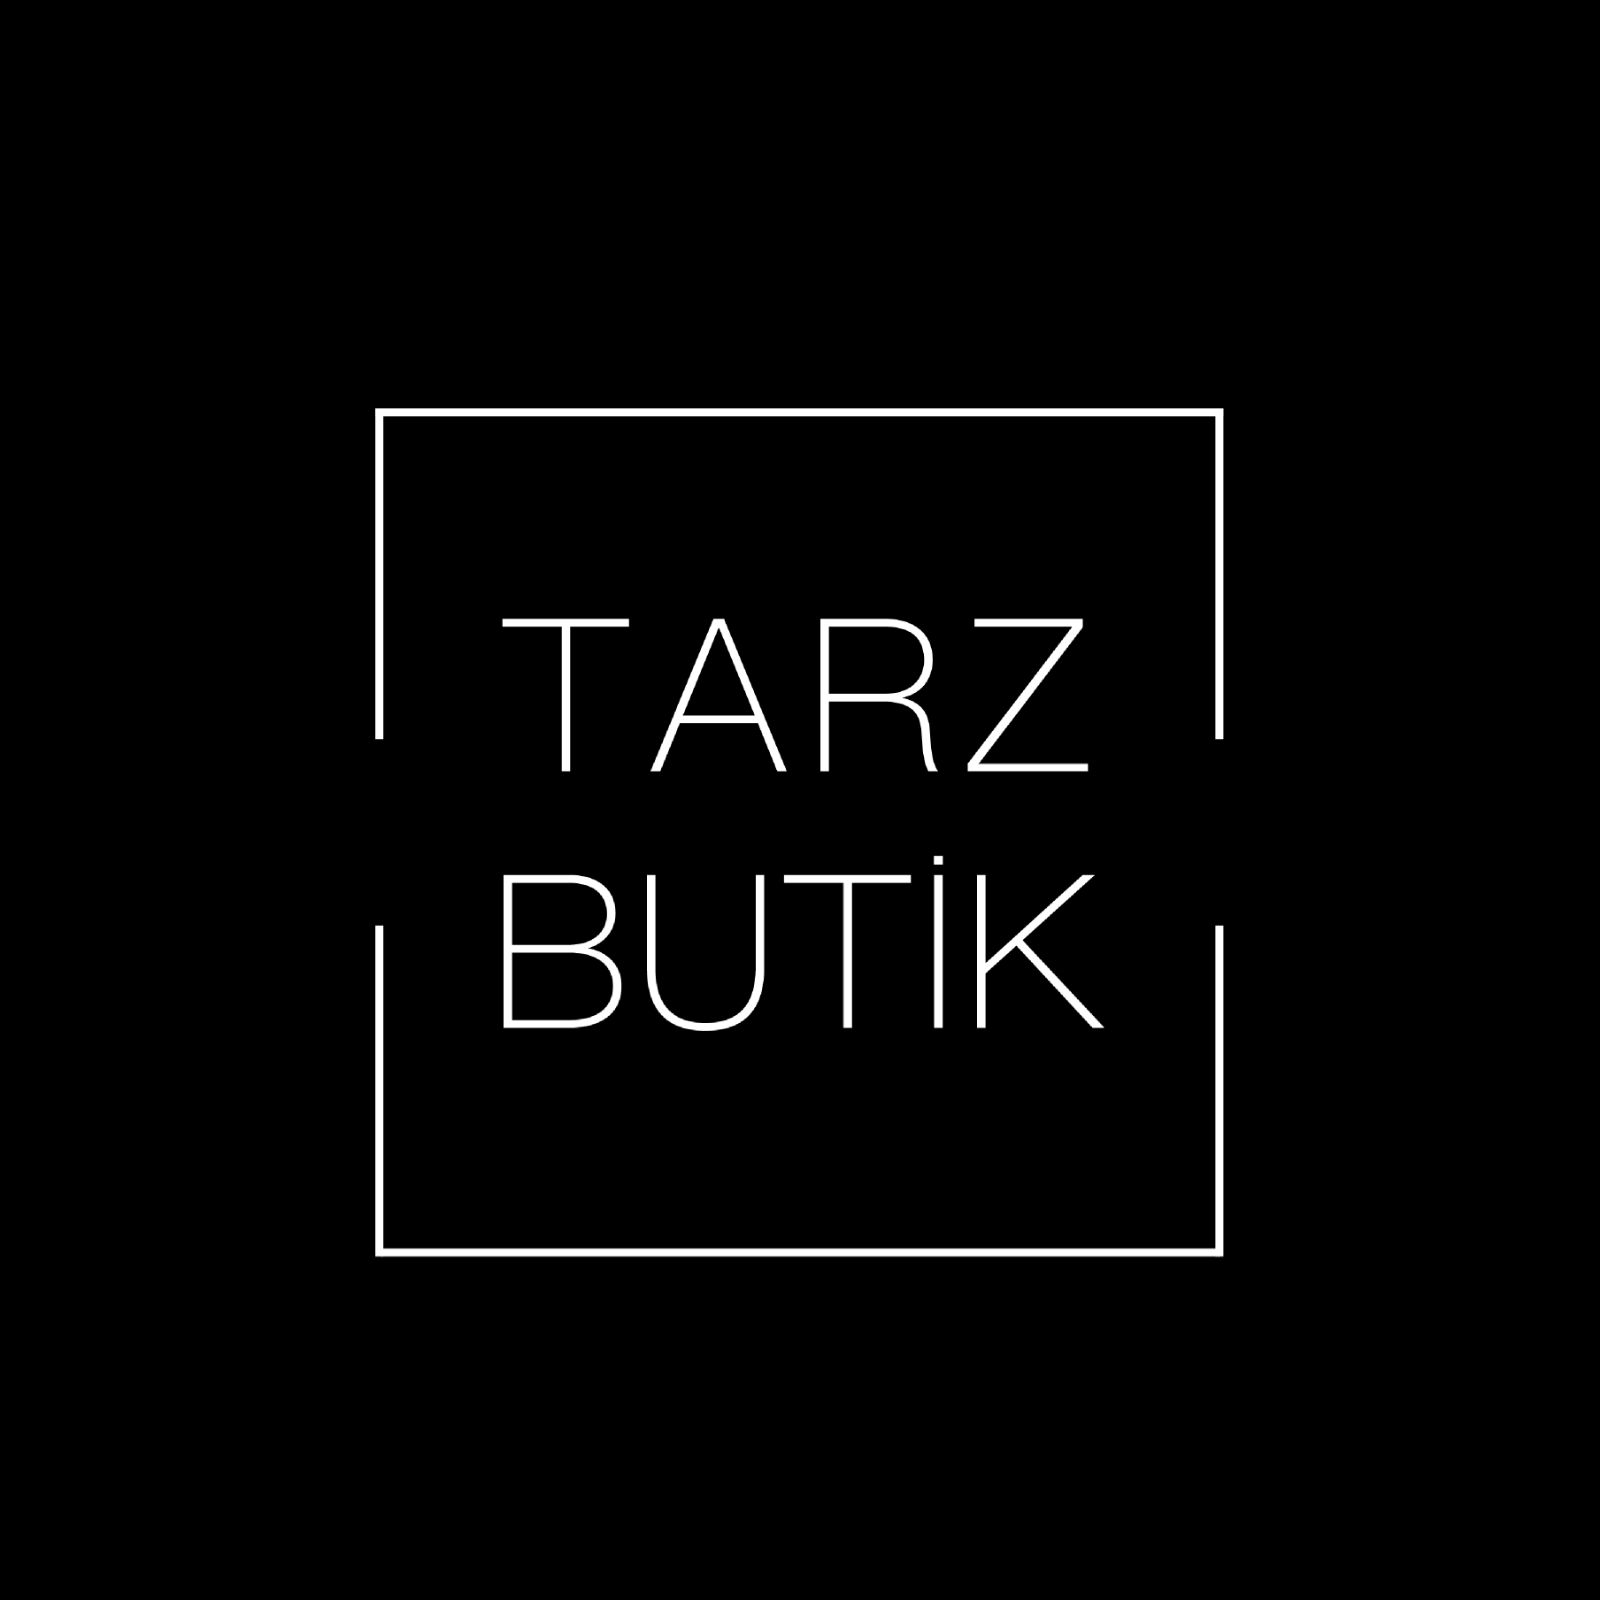 TarzButik